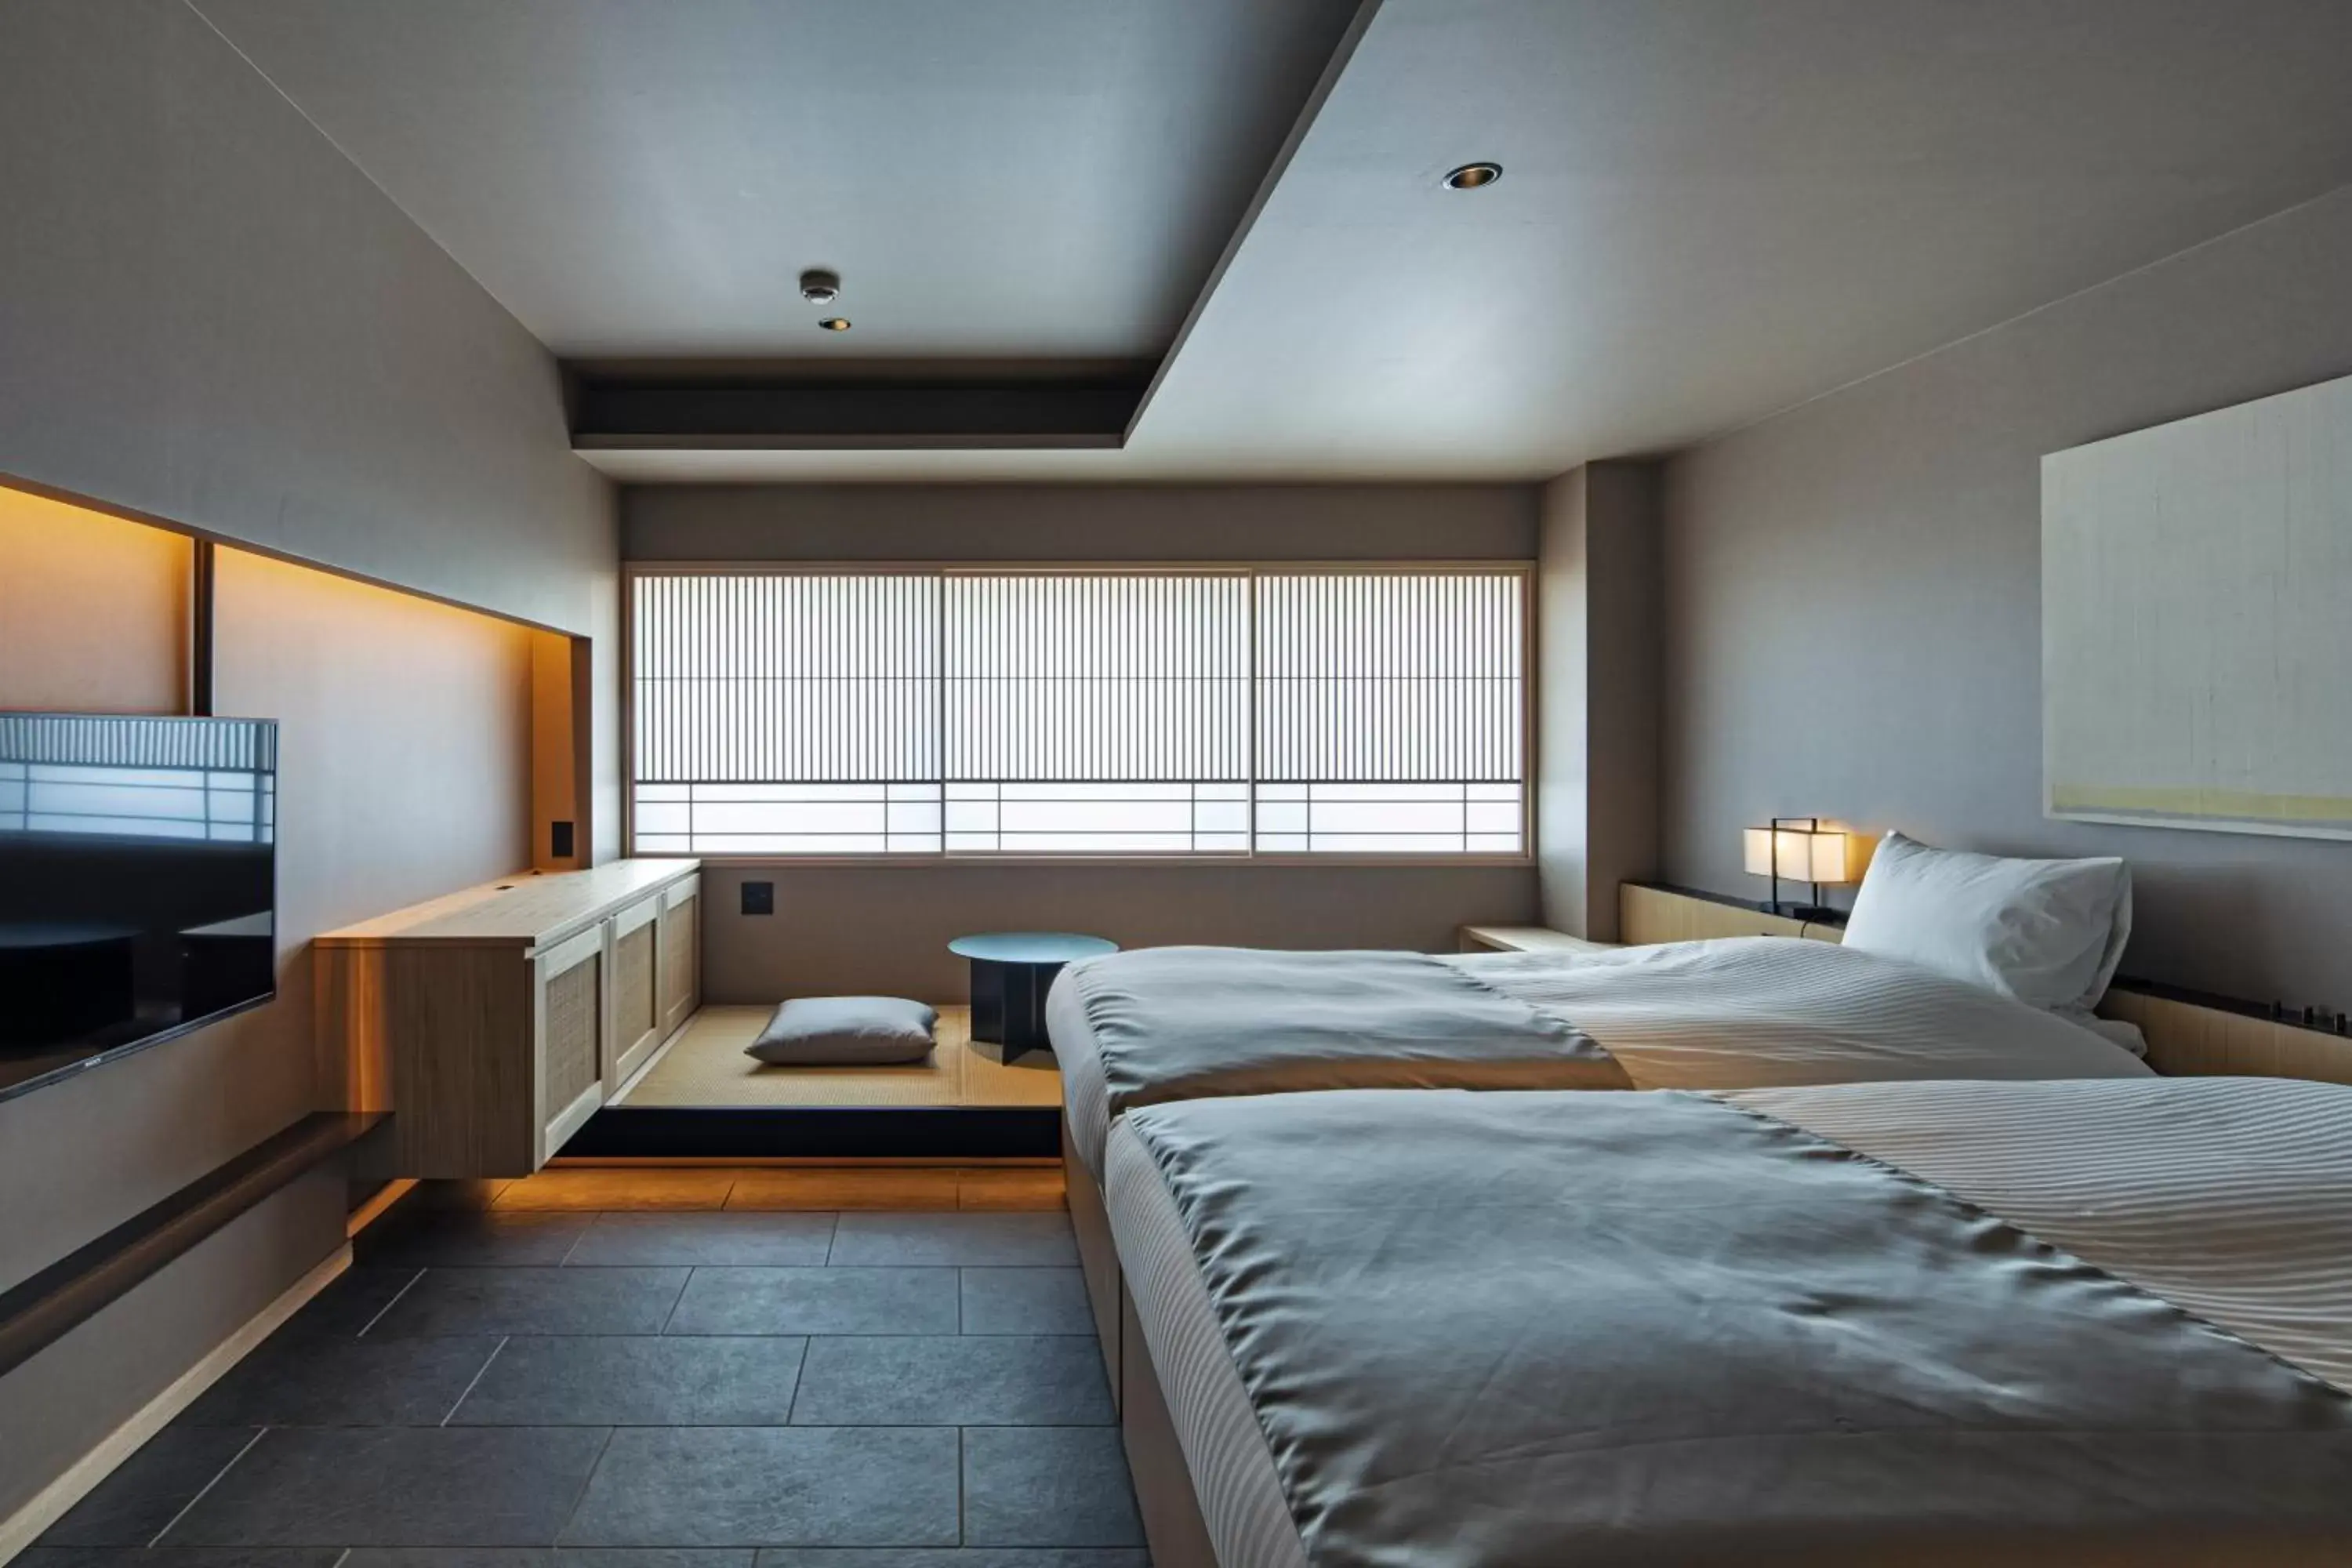 Bed in hotel tou nishinotoin kyoto